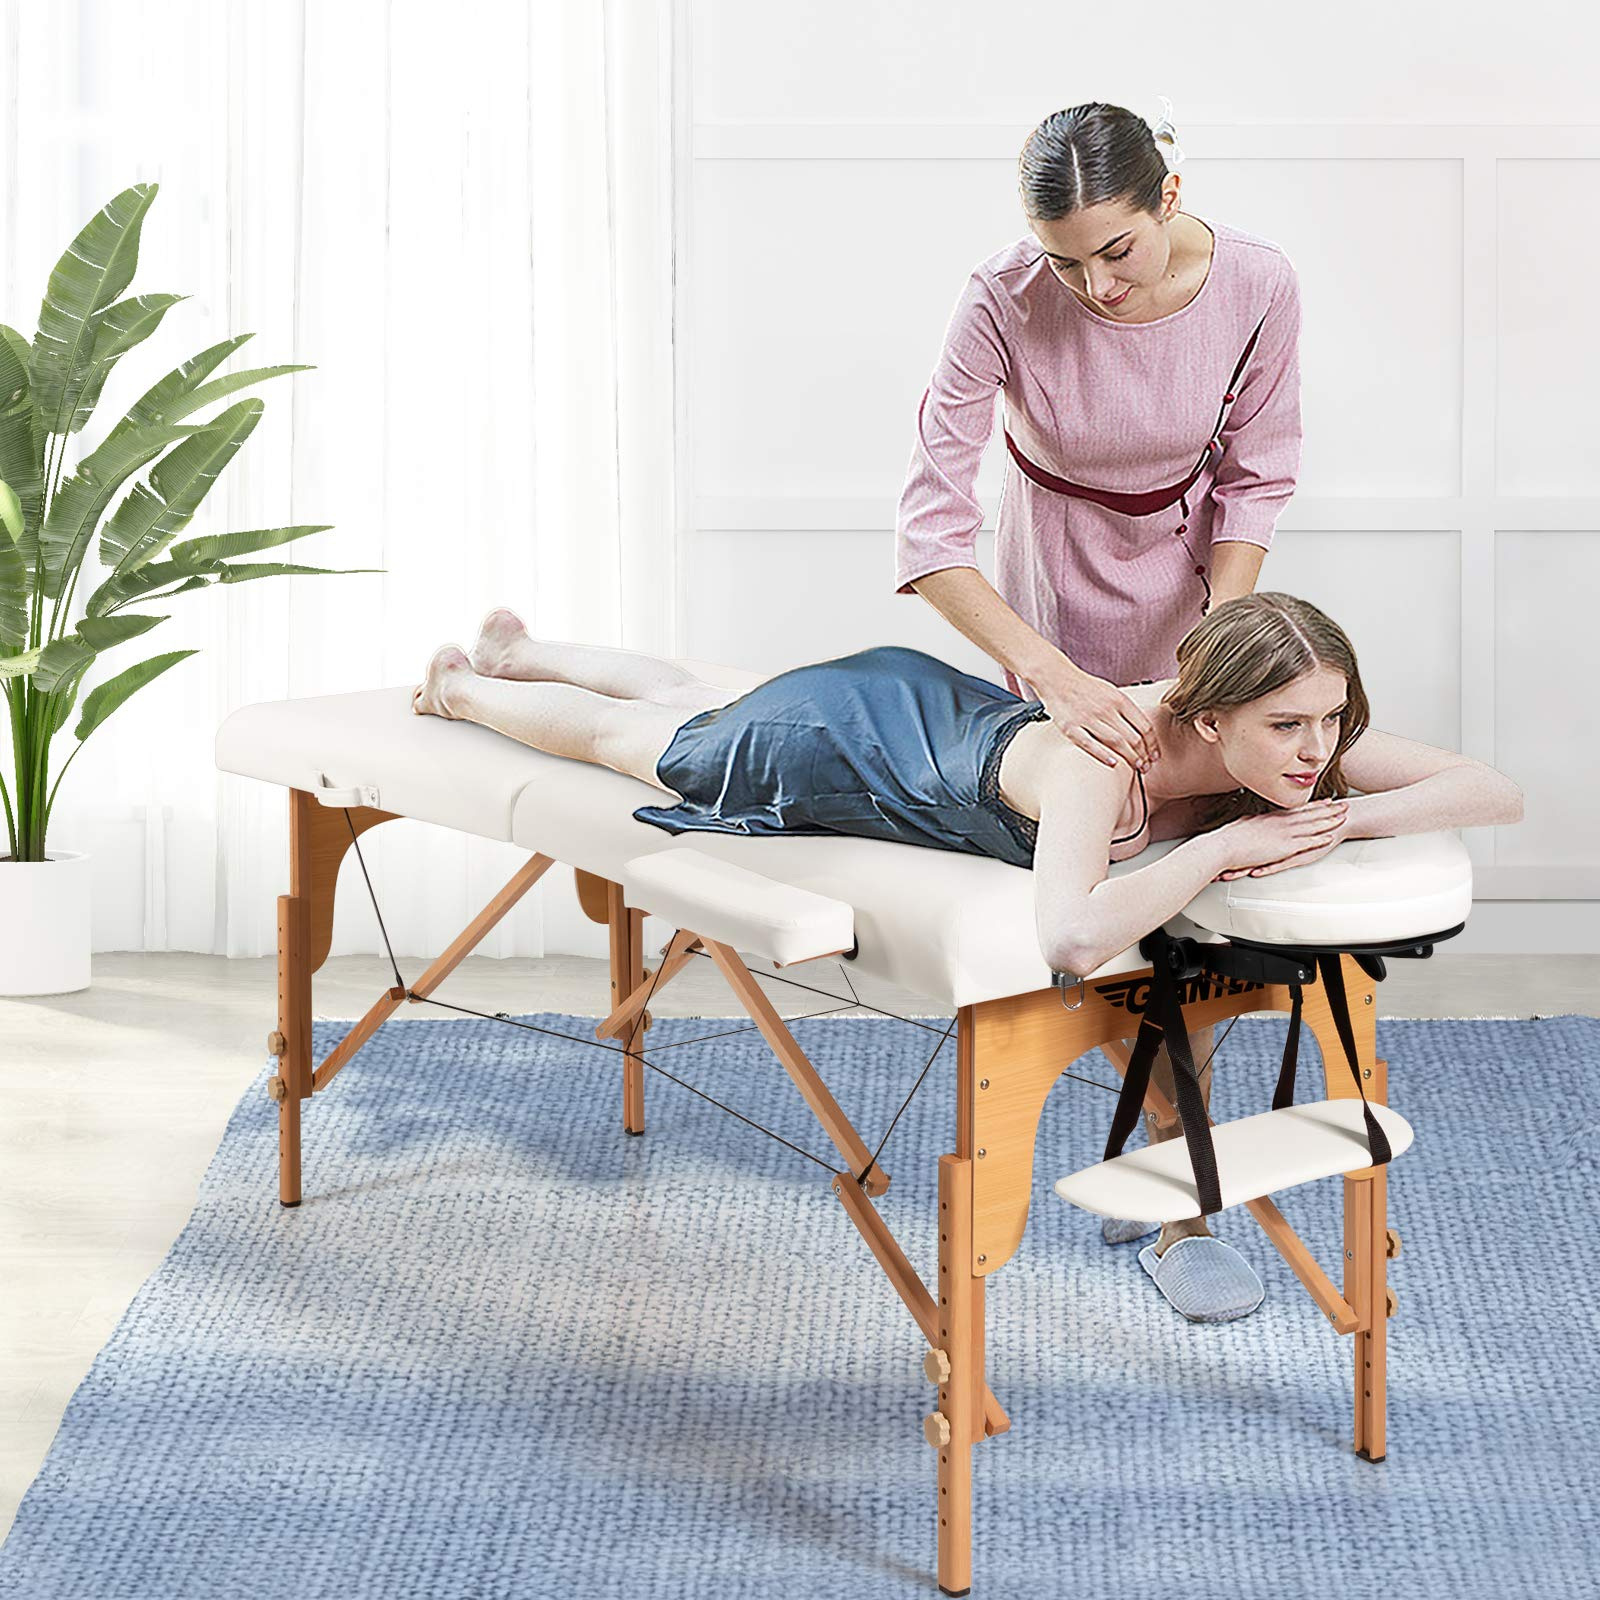 84 inch Massage Table Lash Bed - Giantex